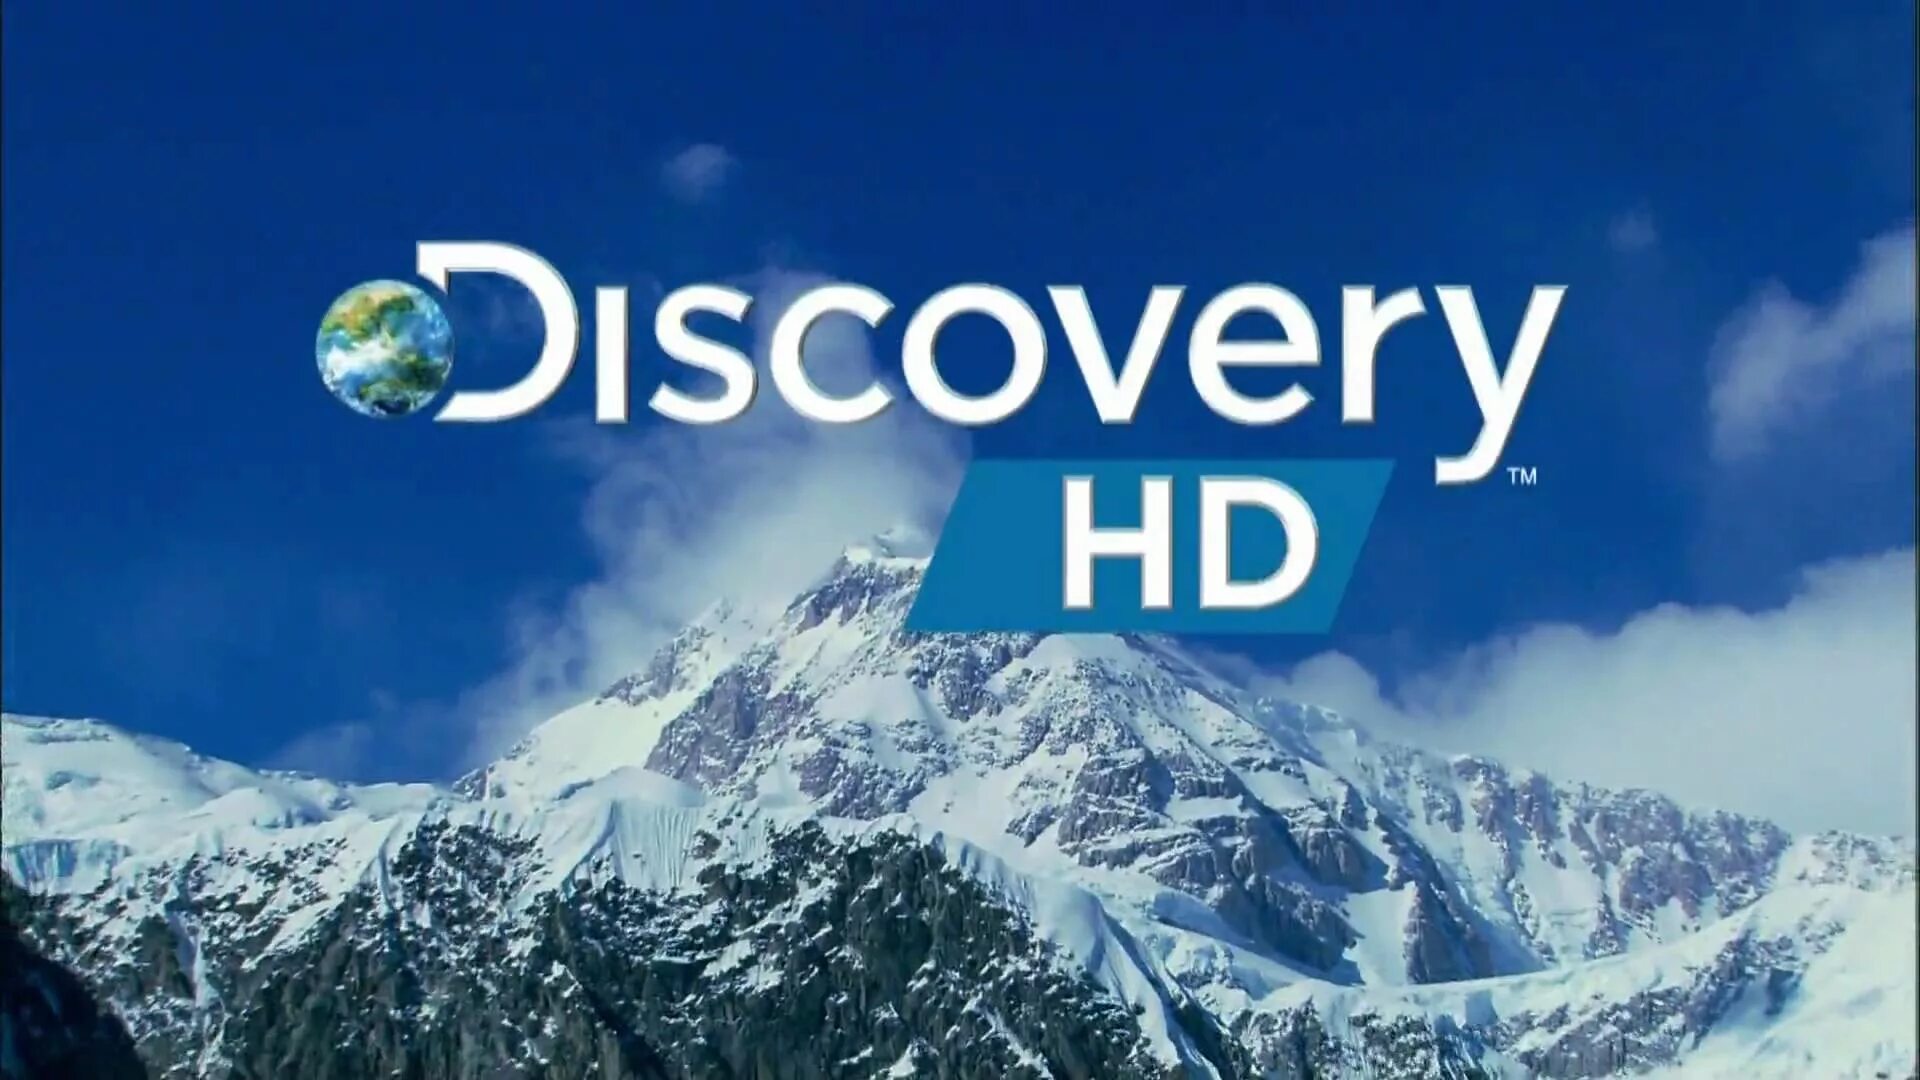 Дискавери слушать. Discovery channel. Телеканал Discovery. Дискавери логотип. Дискавери заставка.